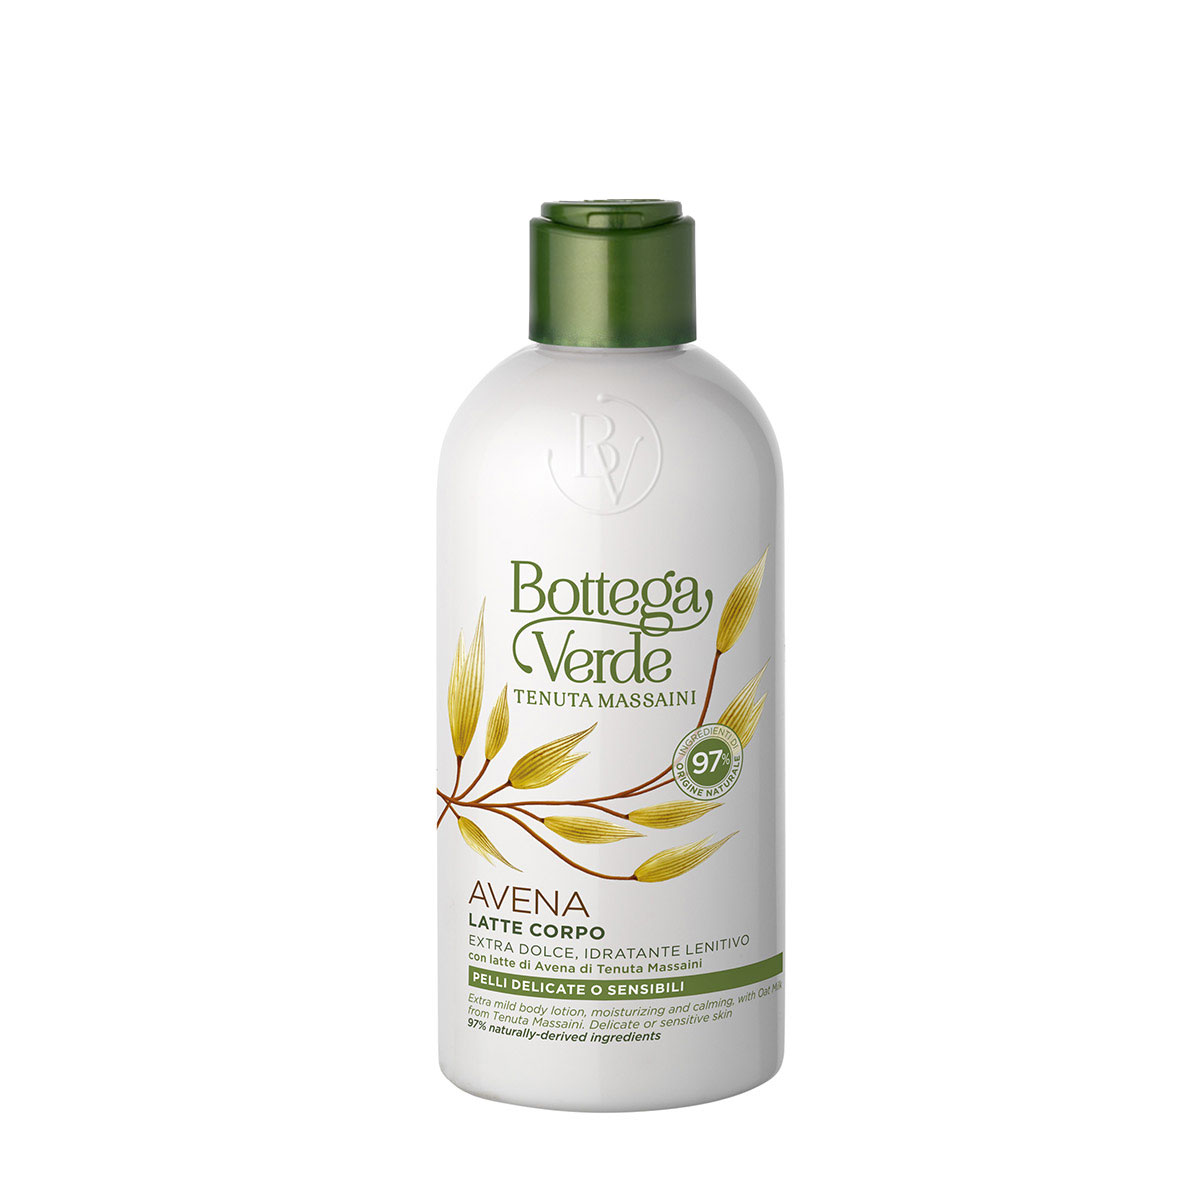 AVENA - Extra mild body lotion, moisturizing and calming, with Oat Milk from Tenuta Massaini (250 ml) - delicate or sensitive skin